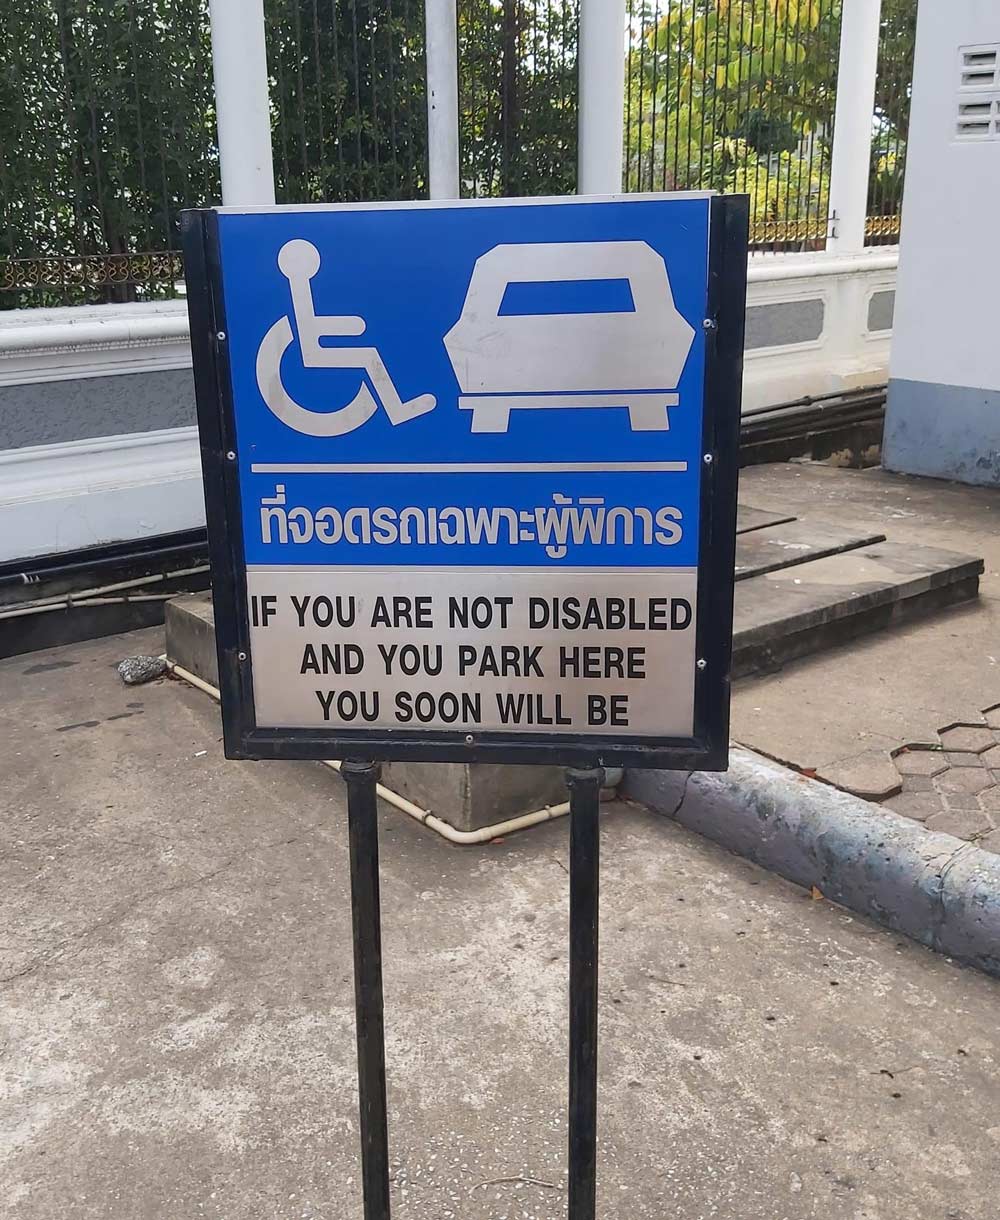 https://www.reddit.com/r/funny/comments/zgoljp/this_parking_spot_in_thailand/